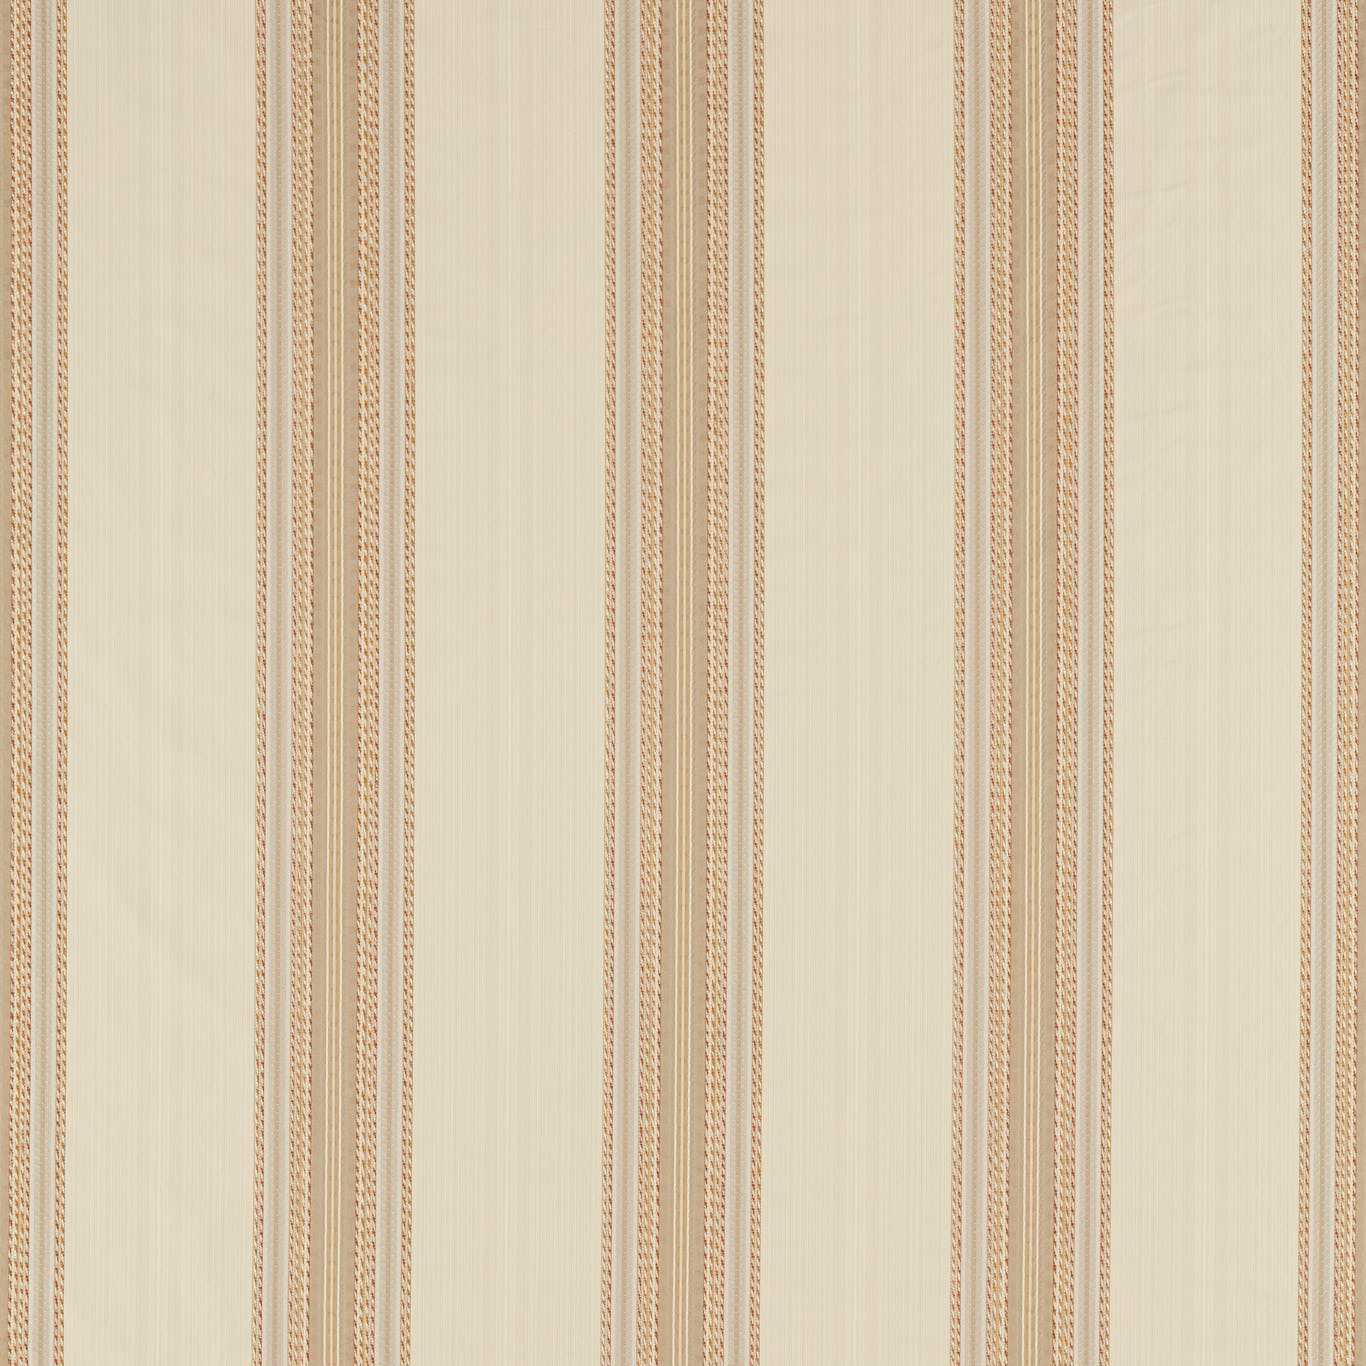 Liseré Stripe Paris Grey Fabric by ZOF